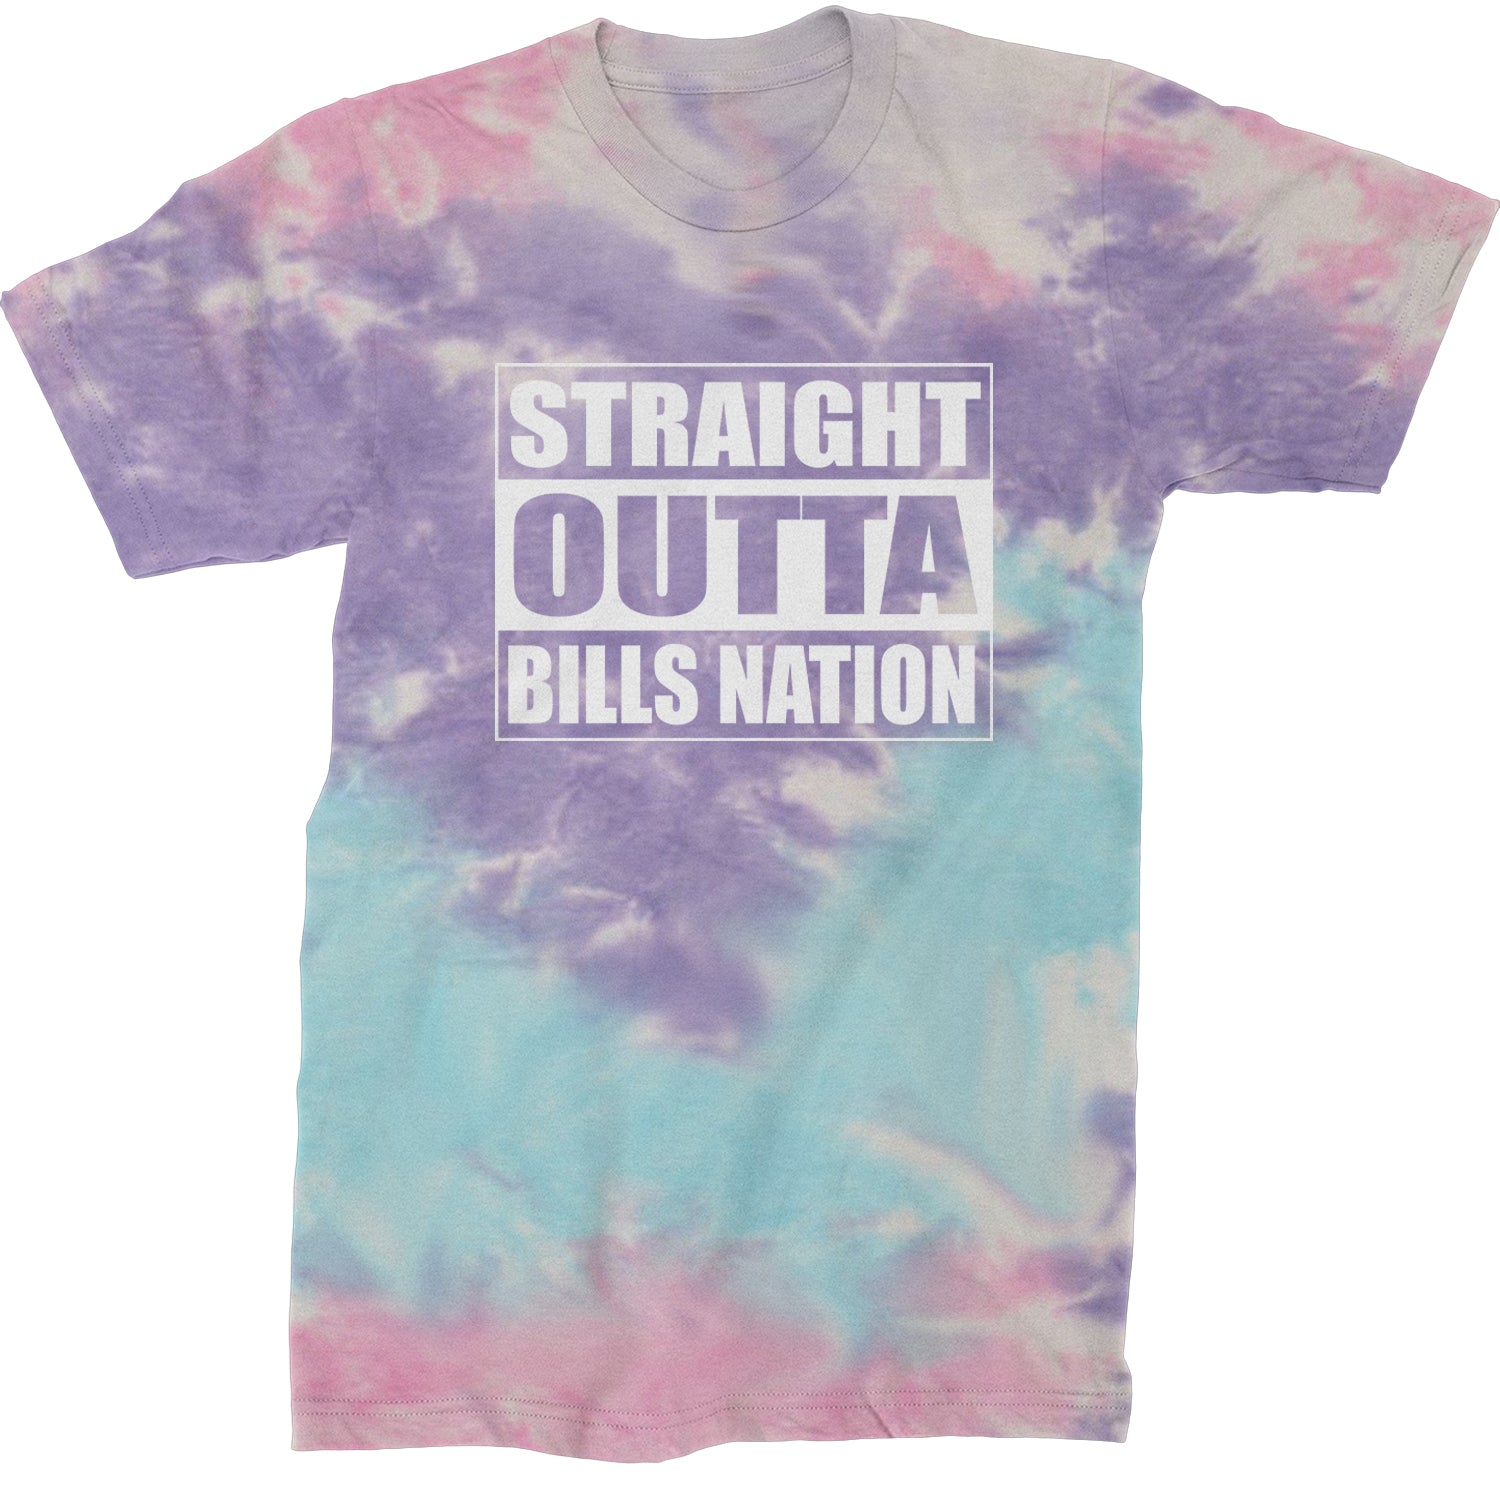 Straight Outta Bills Nation  Mens T-shirt Tie-Dye Cotton Candy